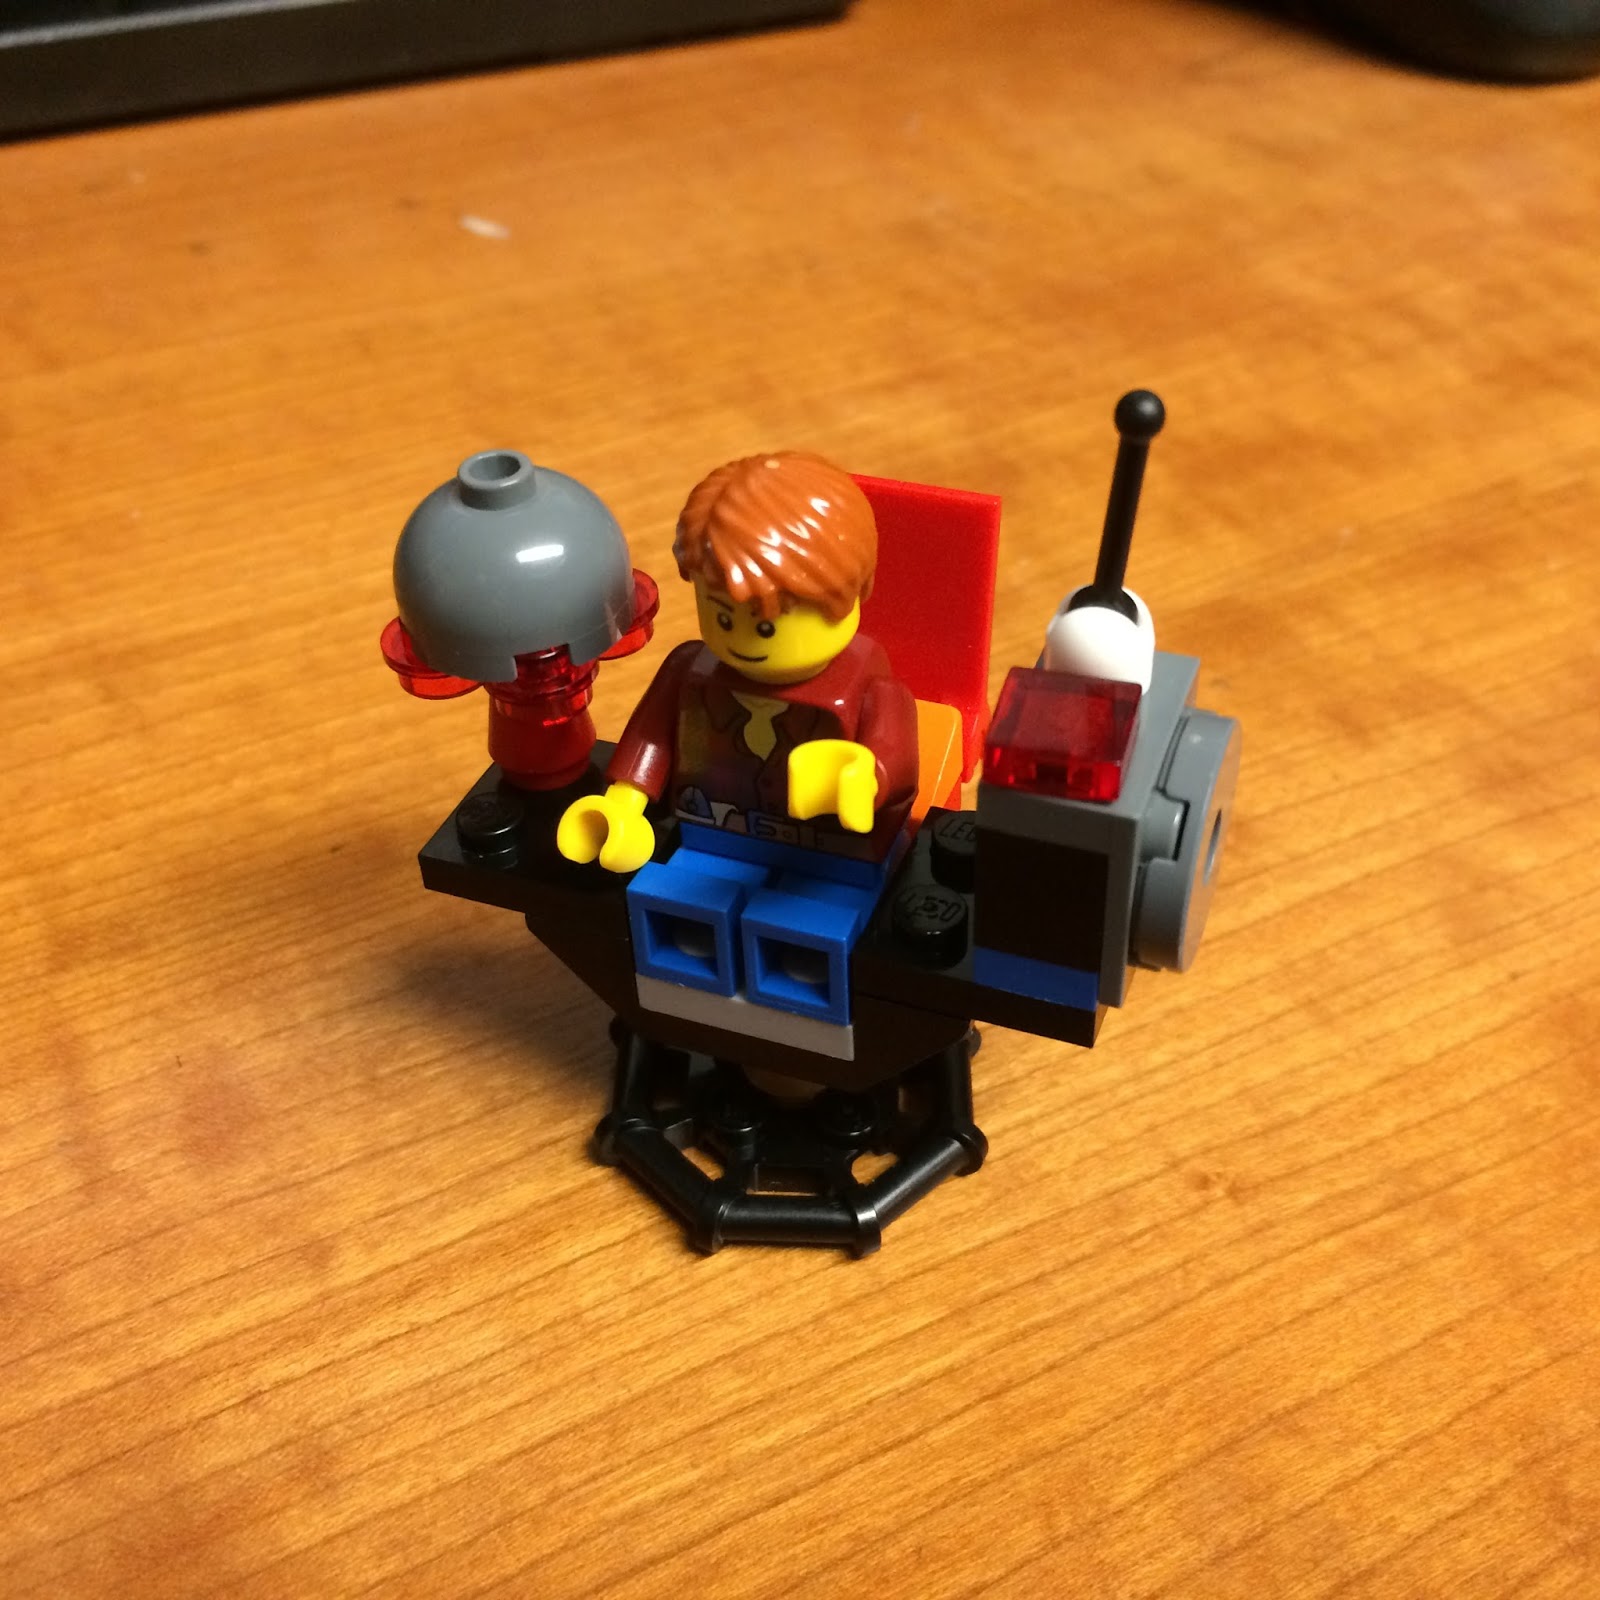 The Lego Master Builder